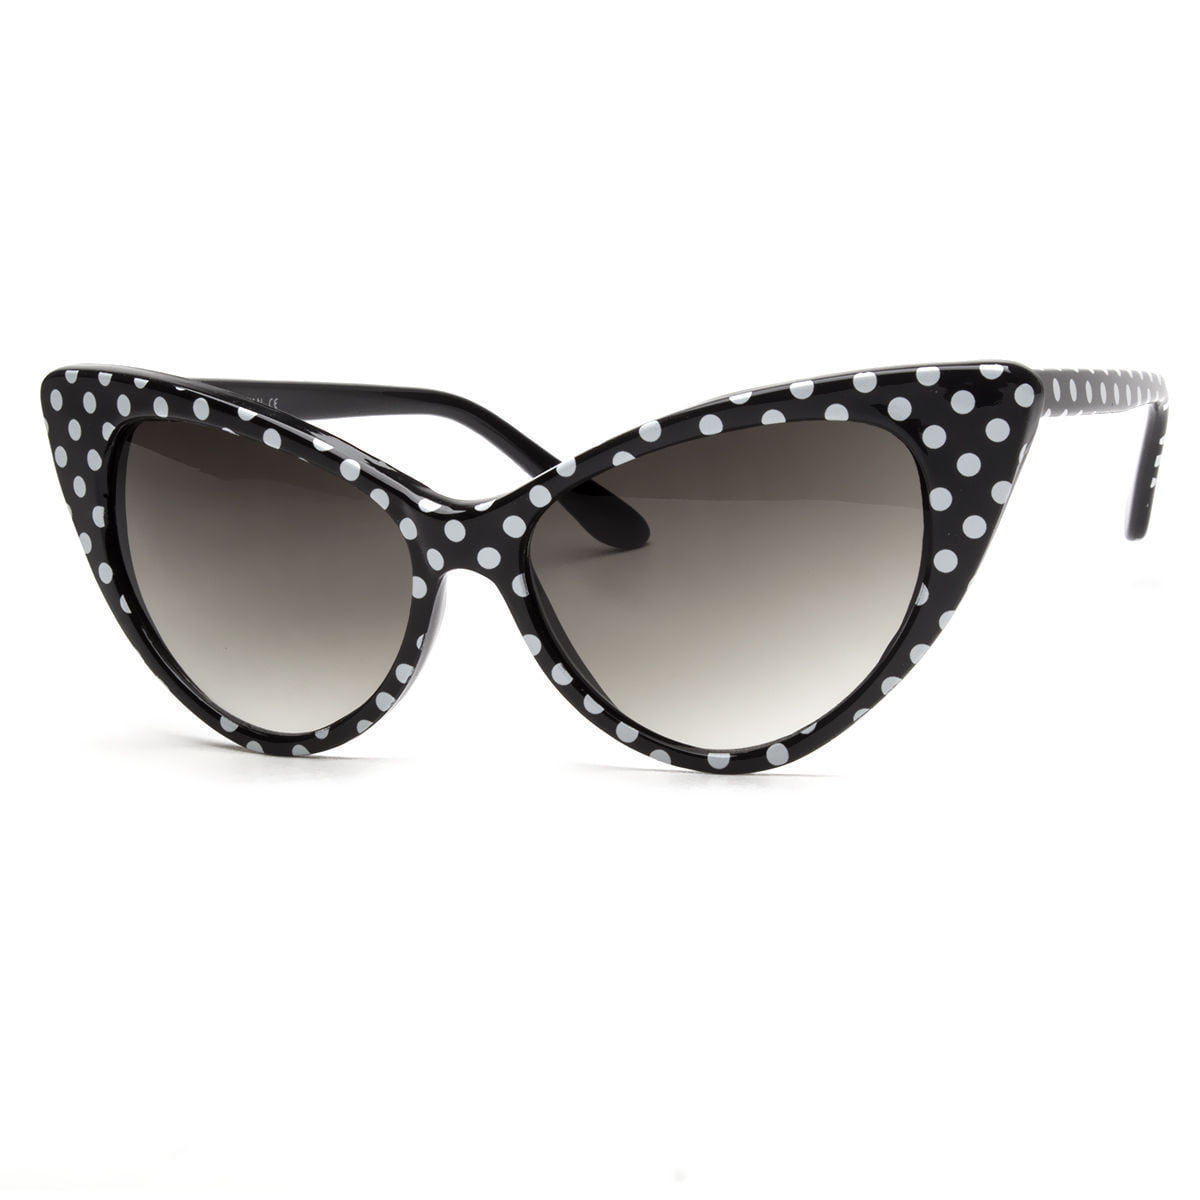 NEW Classic Style Sunglasses Small Vintage Retro Cateye Women Fashion Shade 2019 